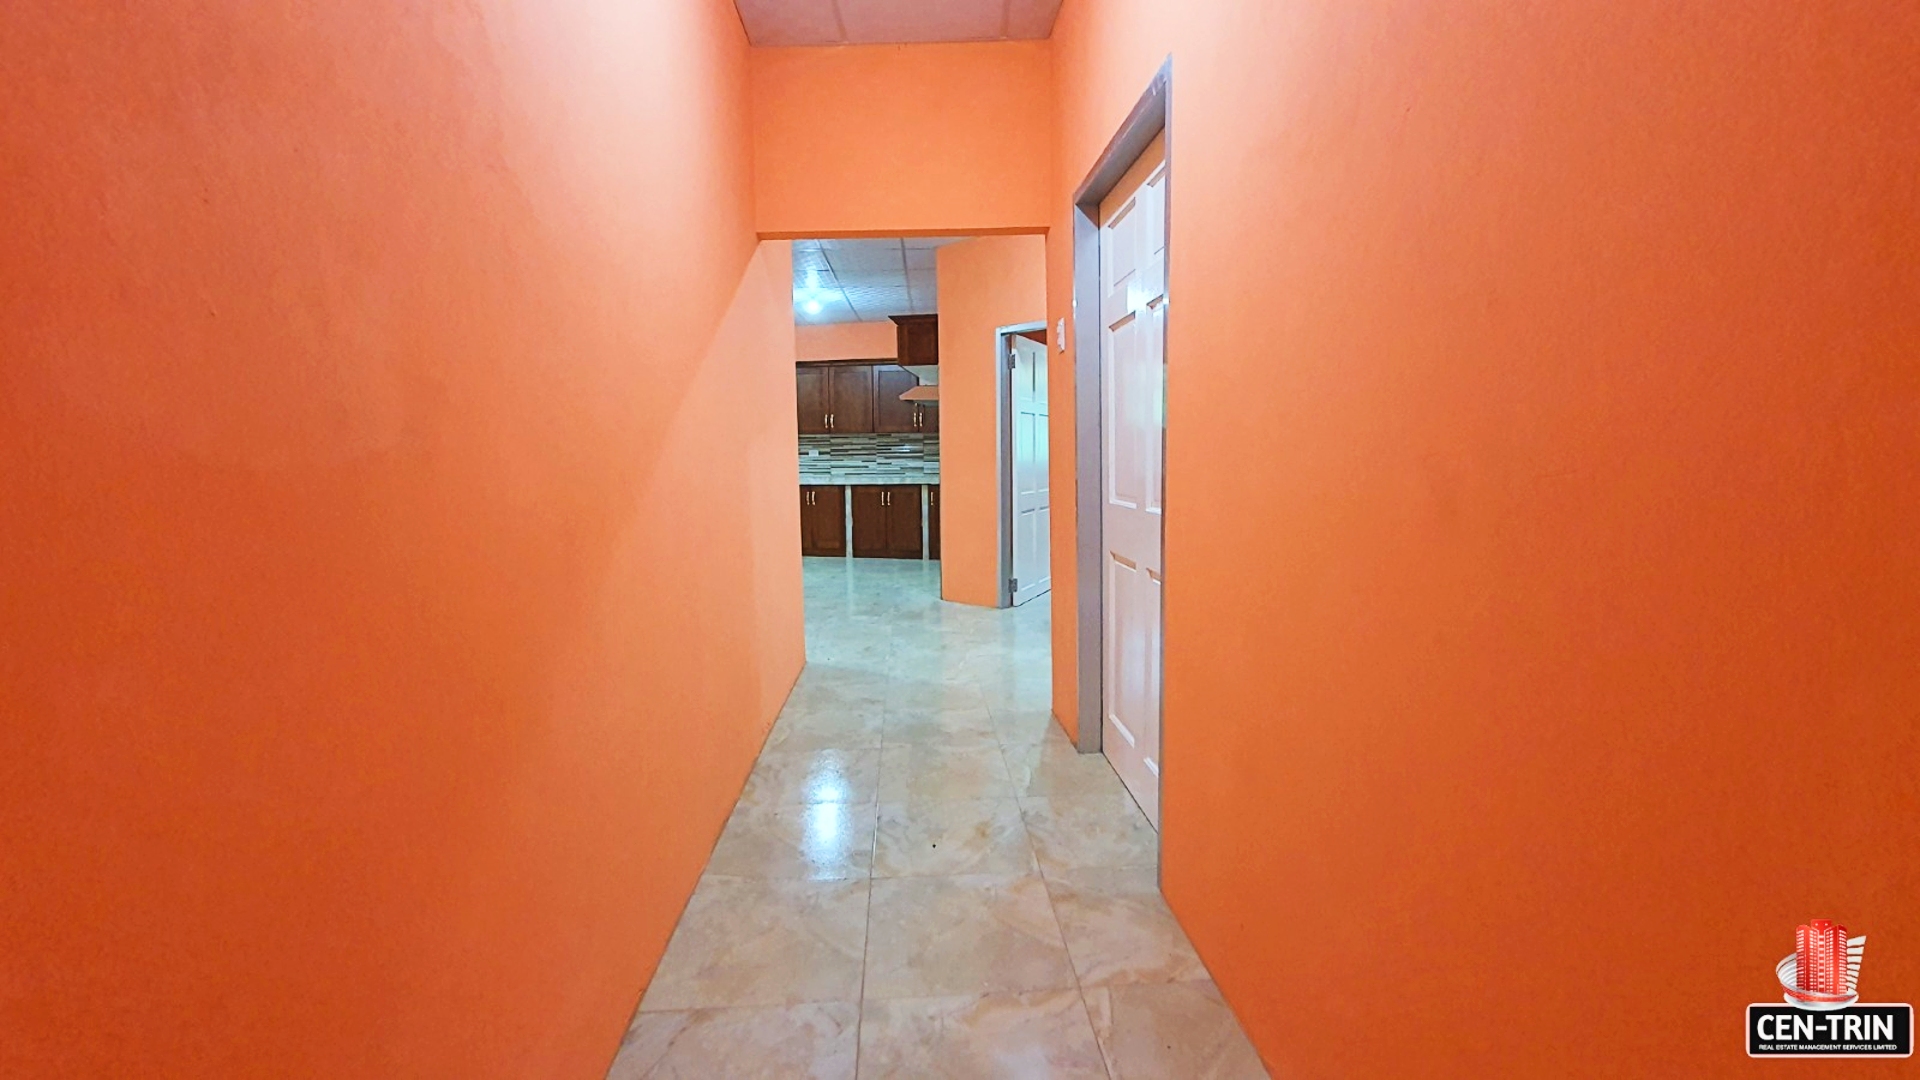 Empty hallway with orange walls leading to a kitchen